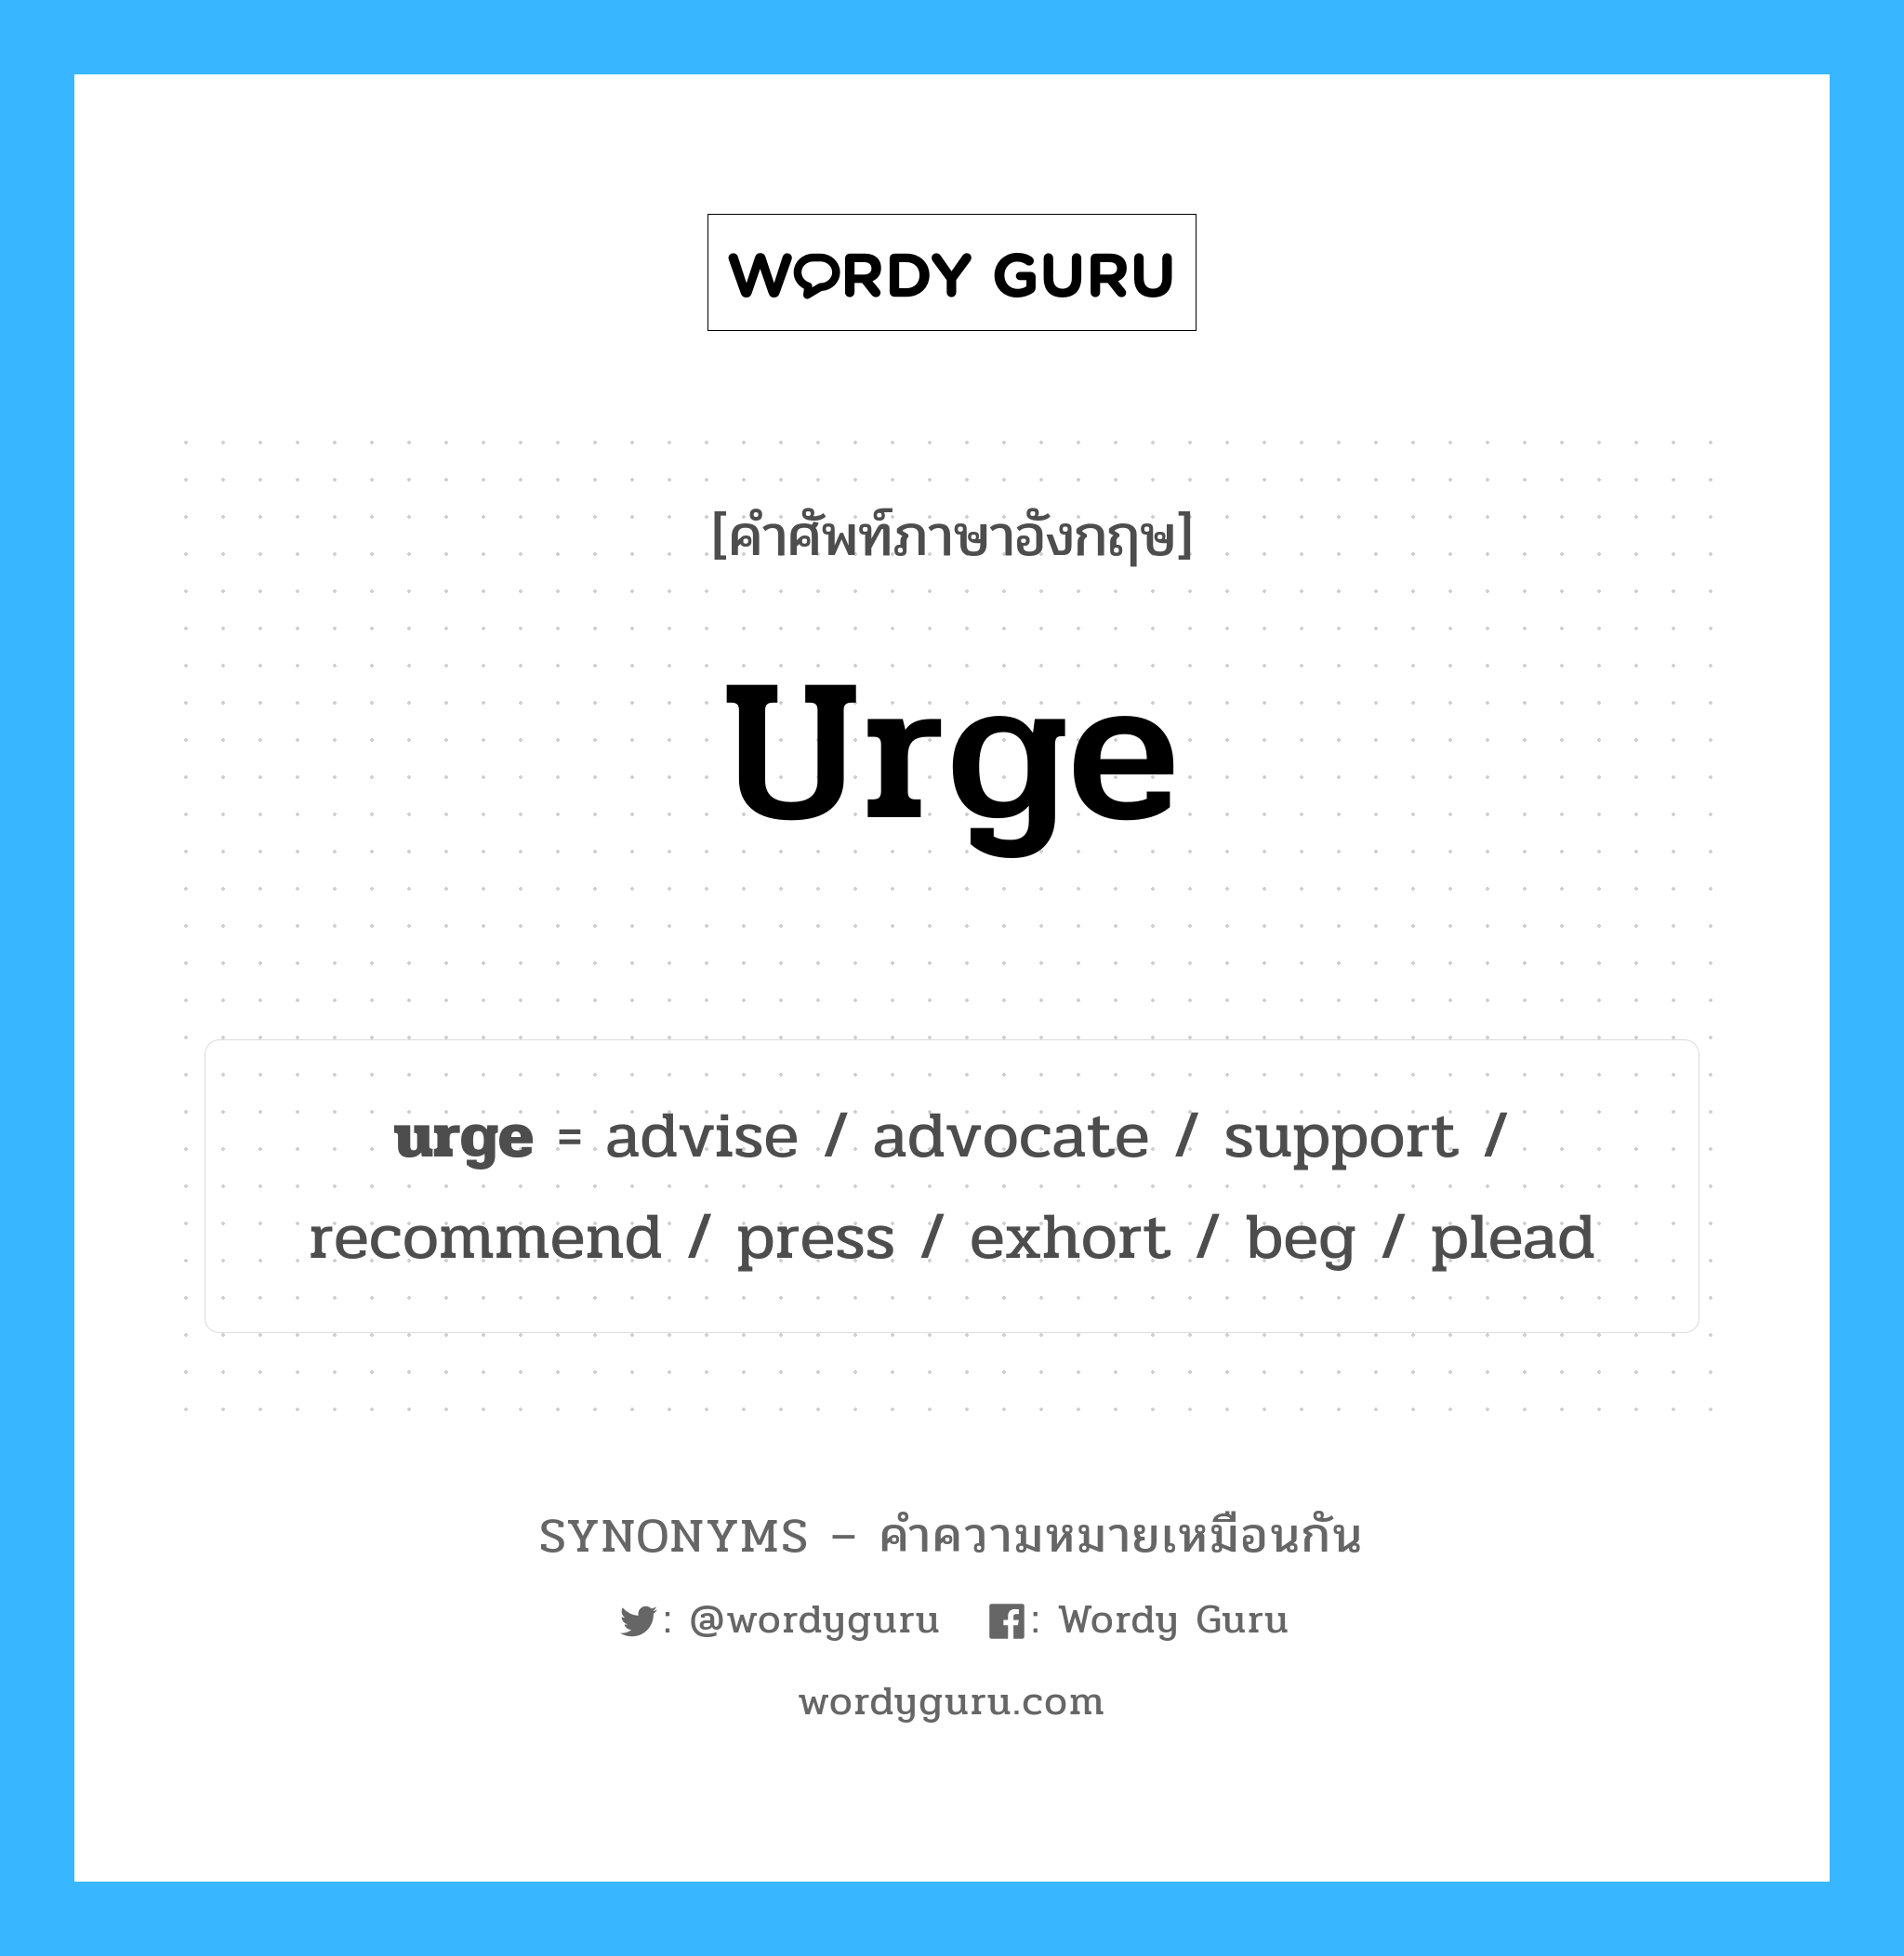 urge เป็นหนึ่งใน support และมีคำอื่น ๆ อีกดังนี้, คำศัพท์ภาษาอังกฤษ urge ความหมายคล้ายกันกับ support แปลว่า การสนับสนุน หมวด support